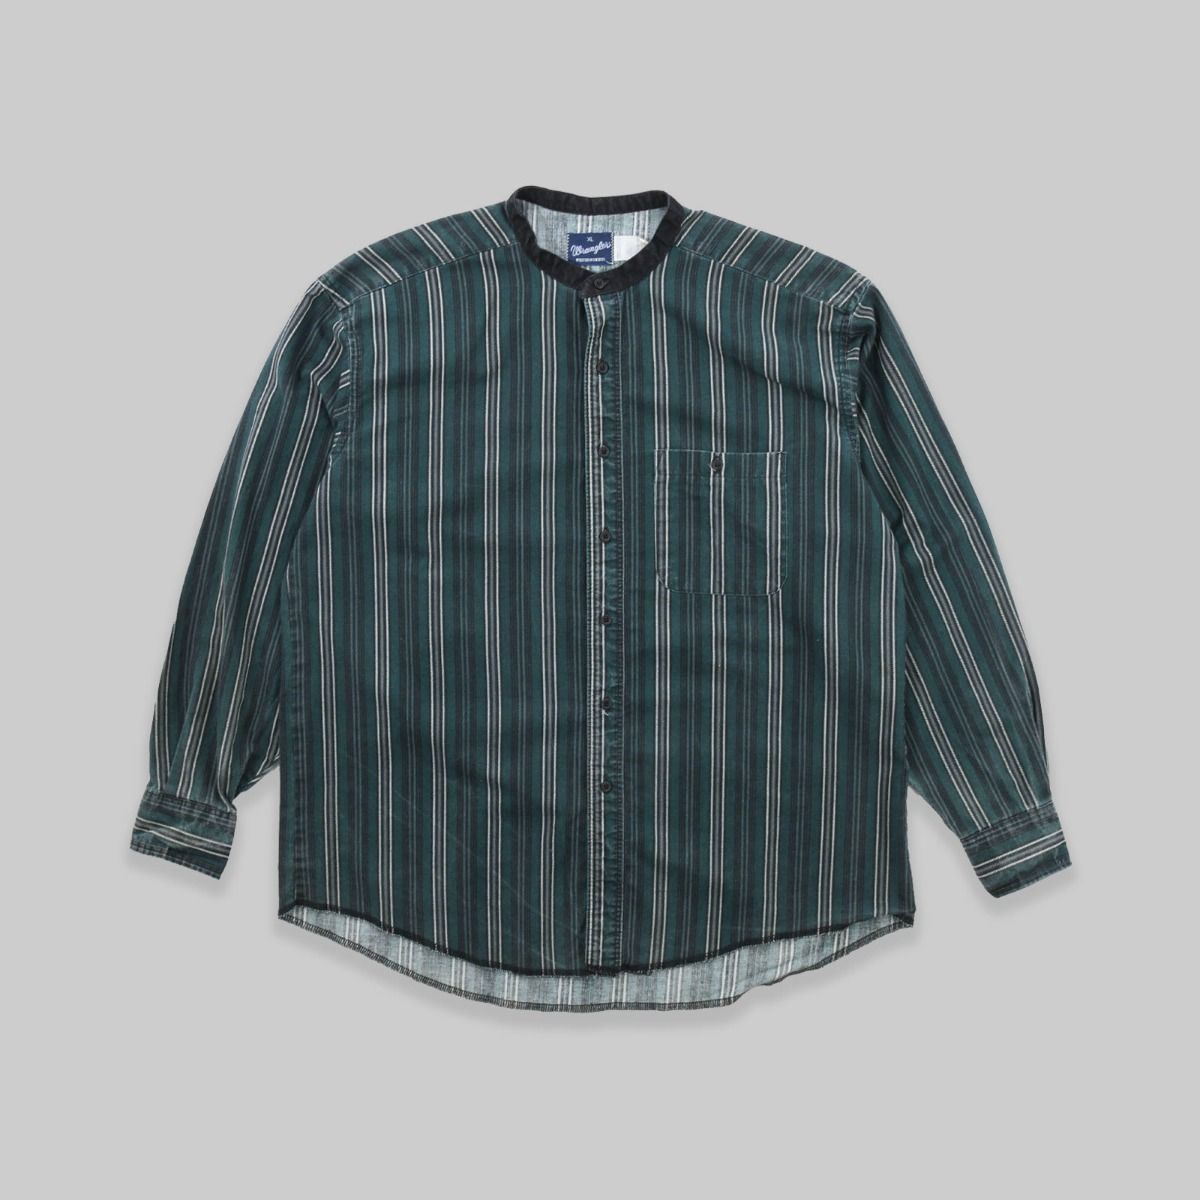 Wrangler 1980s Collarless Cotton Shirt